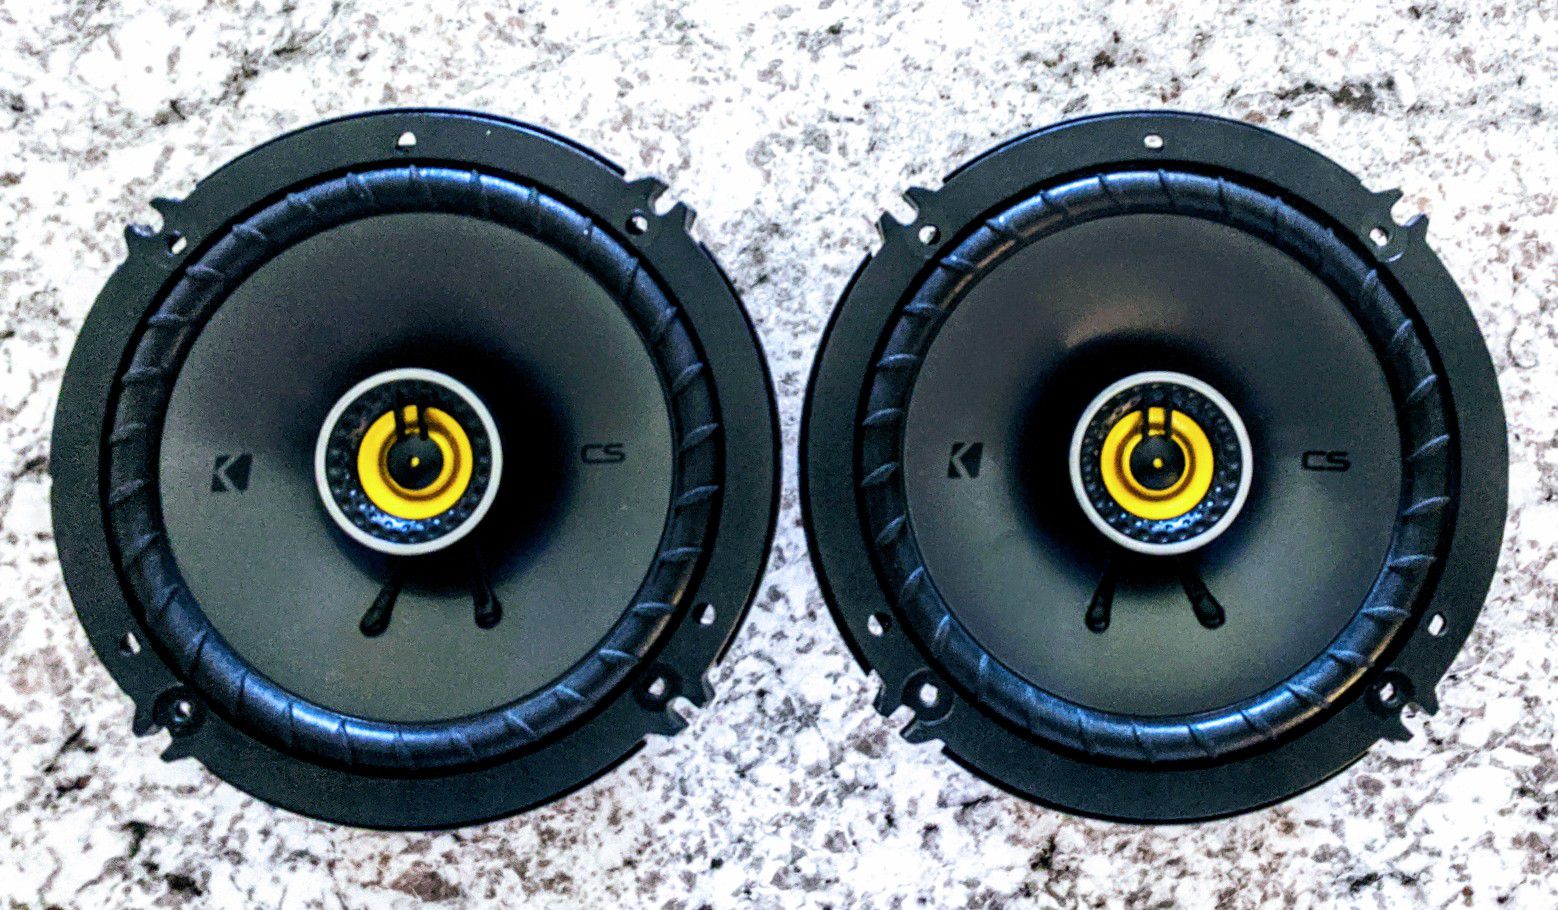 Kicker - CSC65 series 6.5", 2-way car speakers.